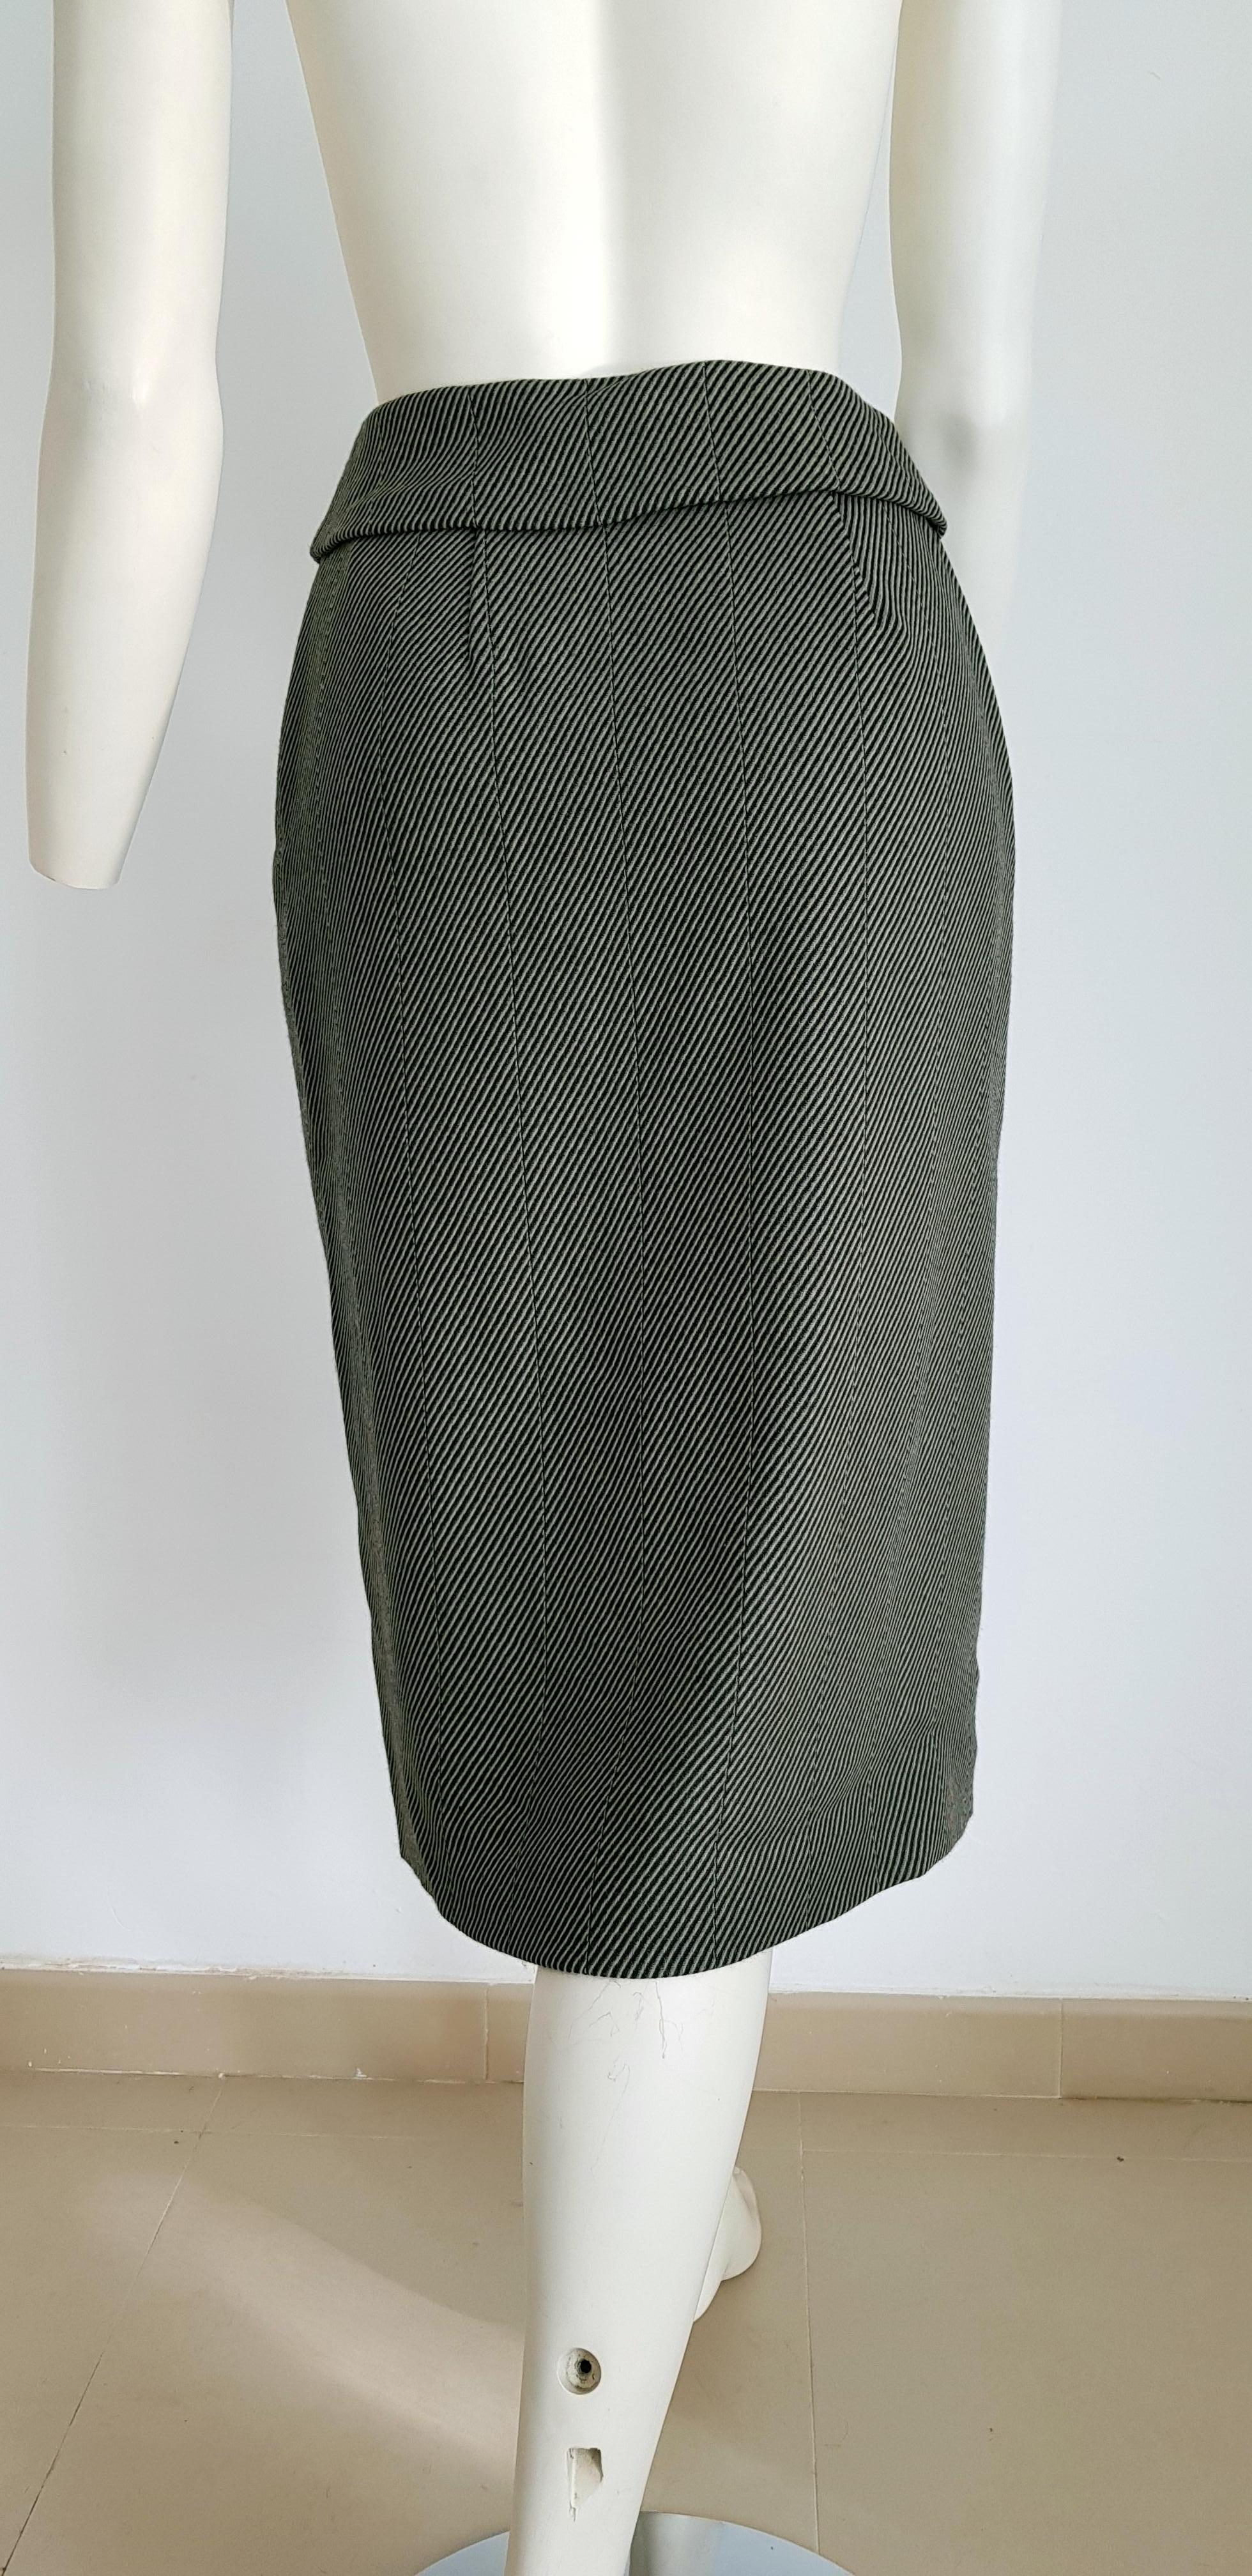 Giorgio ARMANI dark and light grey lines, jacket skirt wool suit - Unworn, New For Sale 2